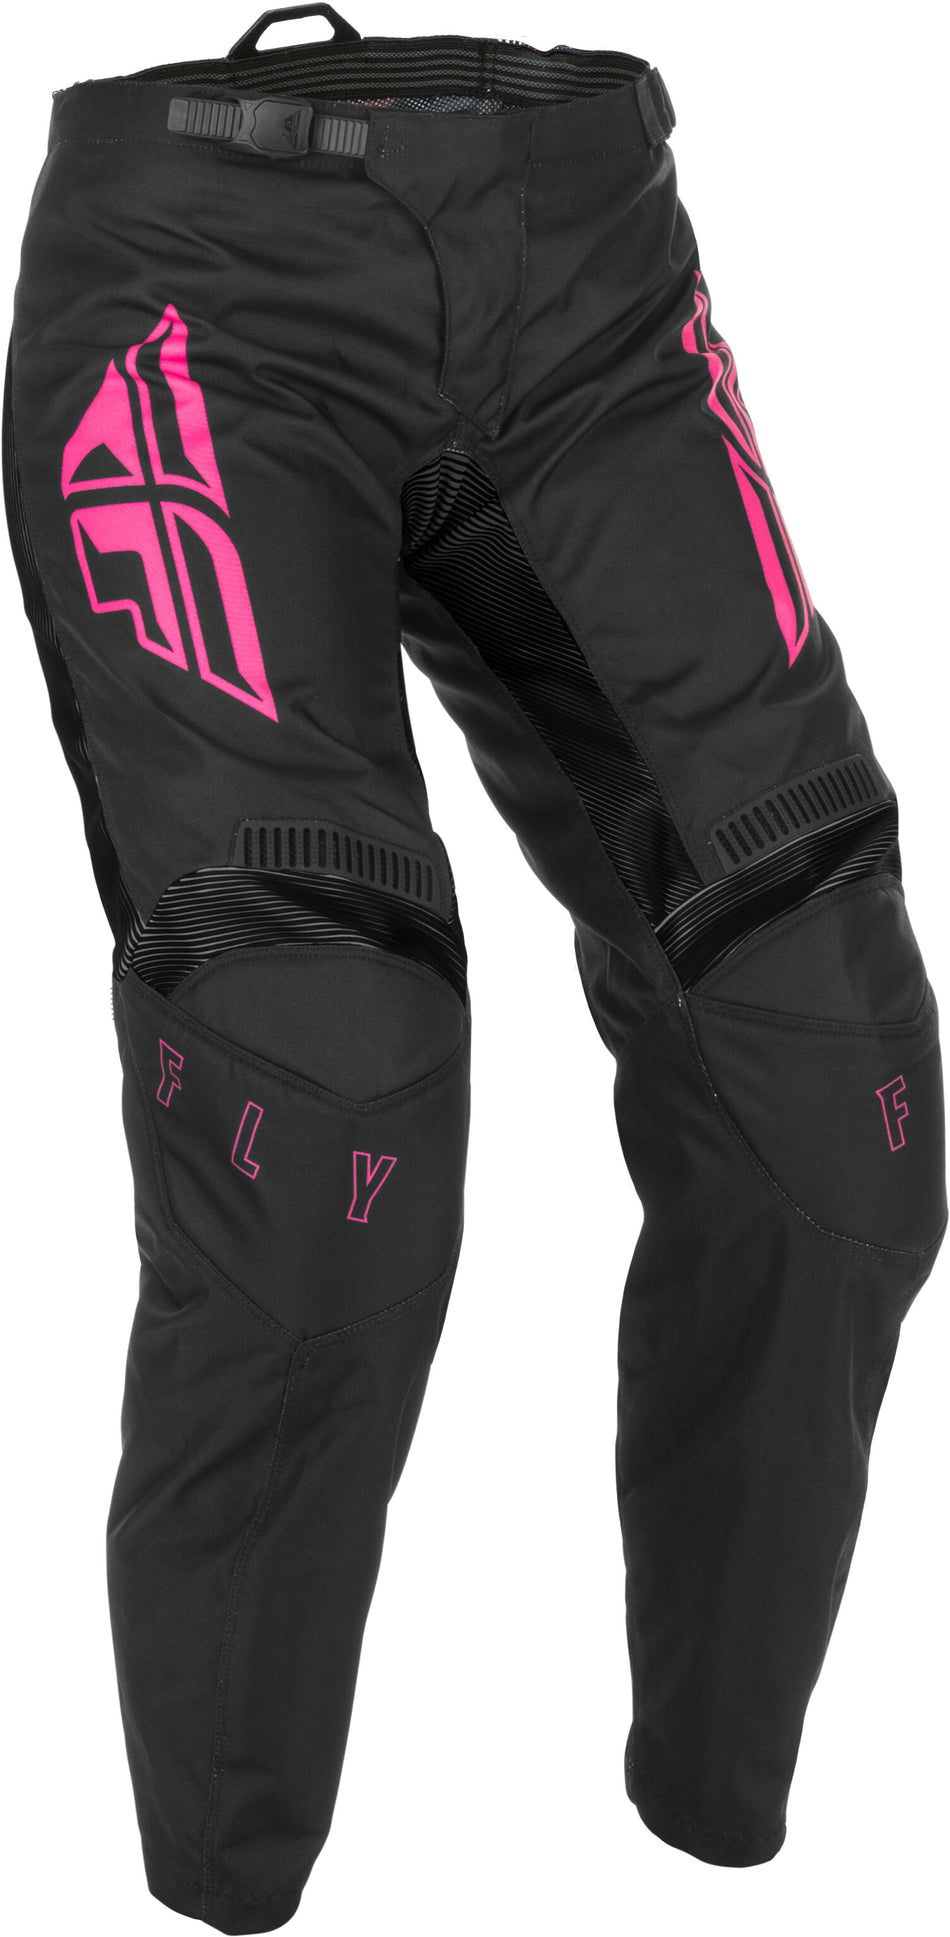 FLY RACING Women's F-16 Pants Black/Pink Sz 0/02 374-83004